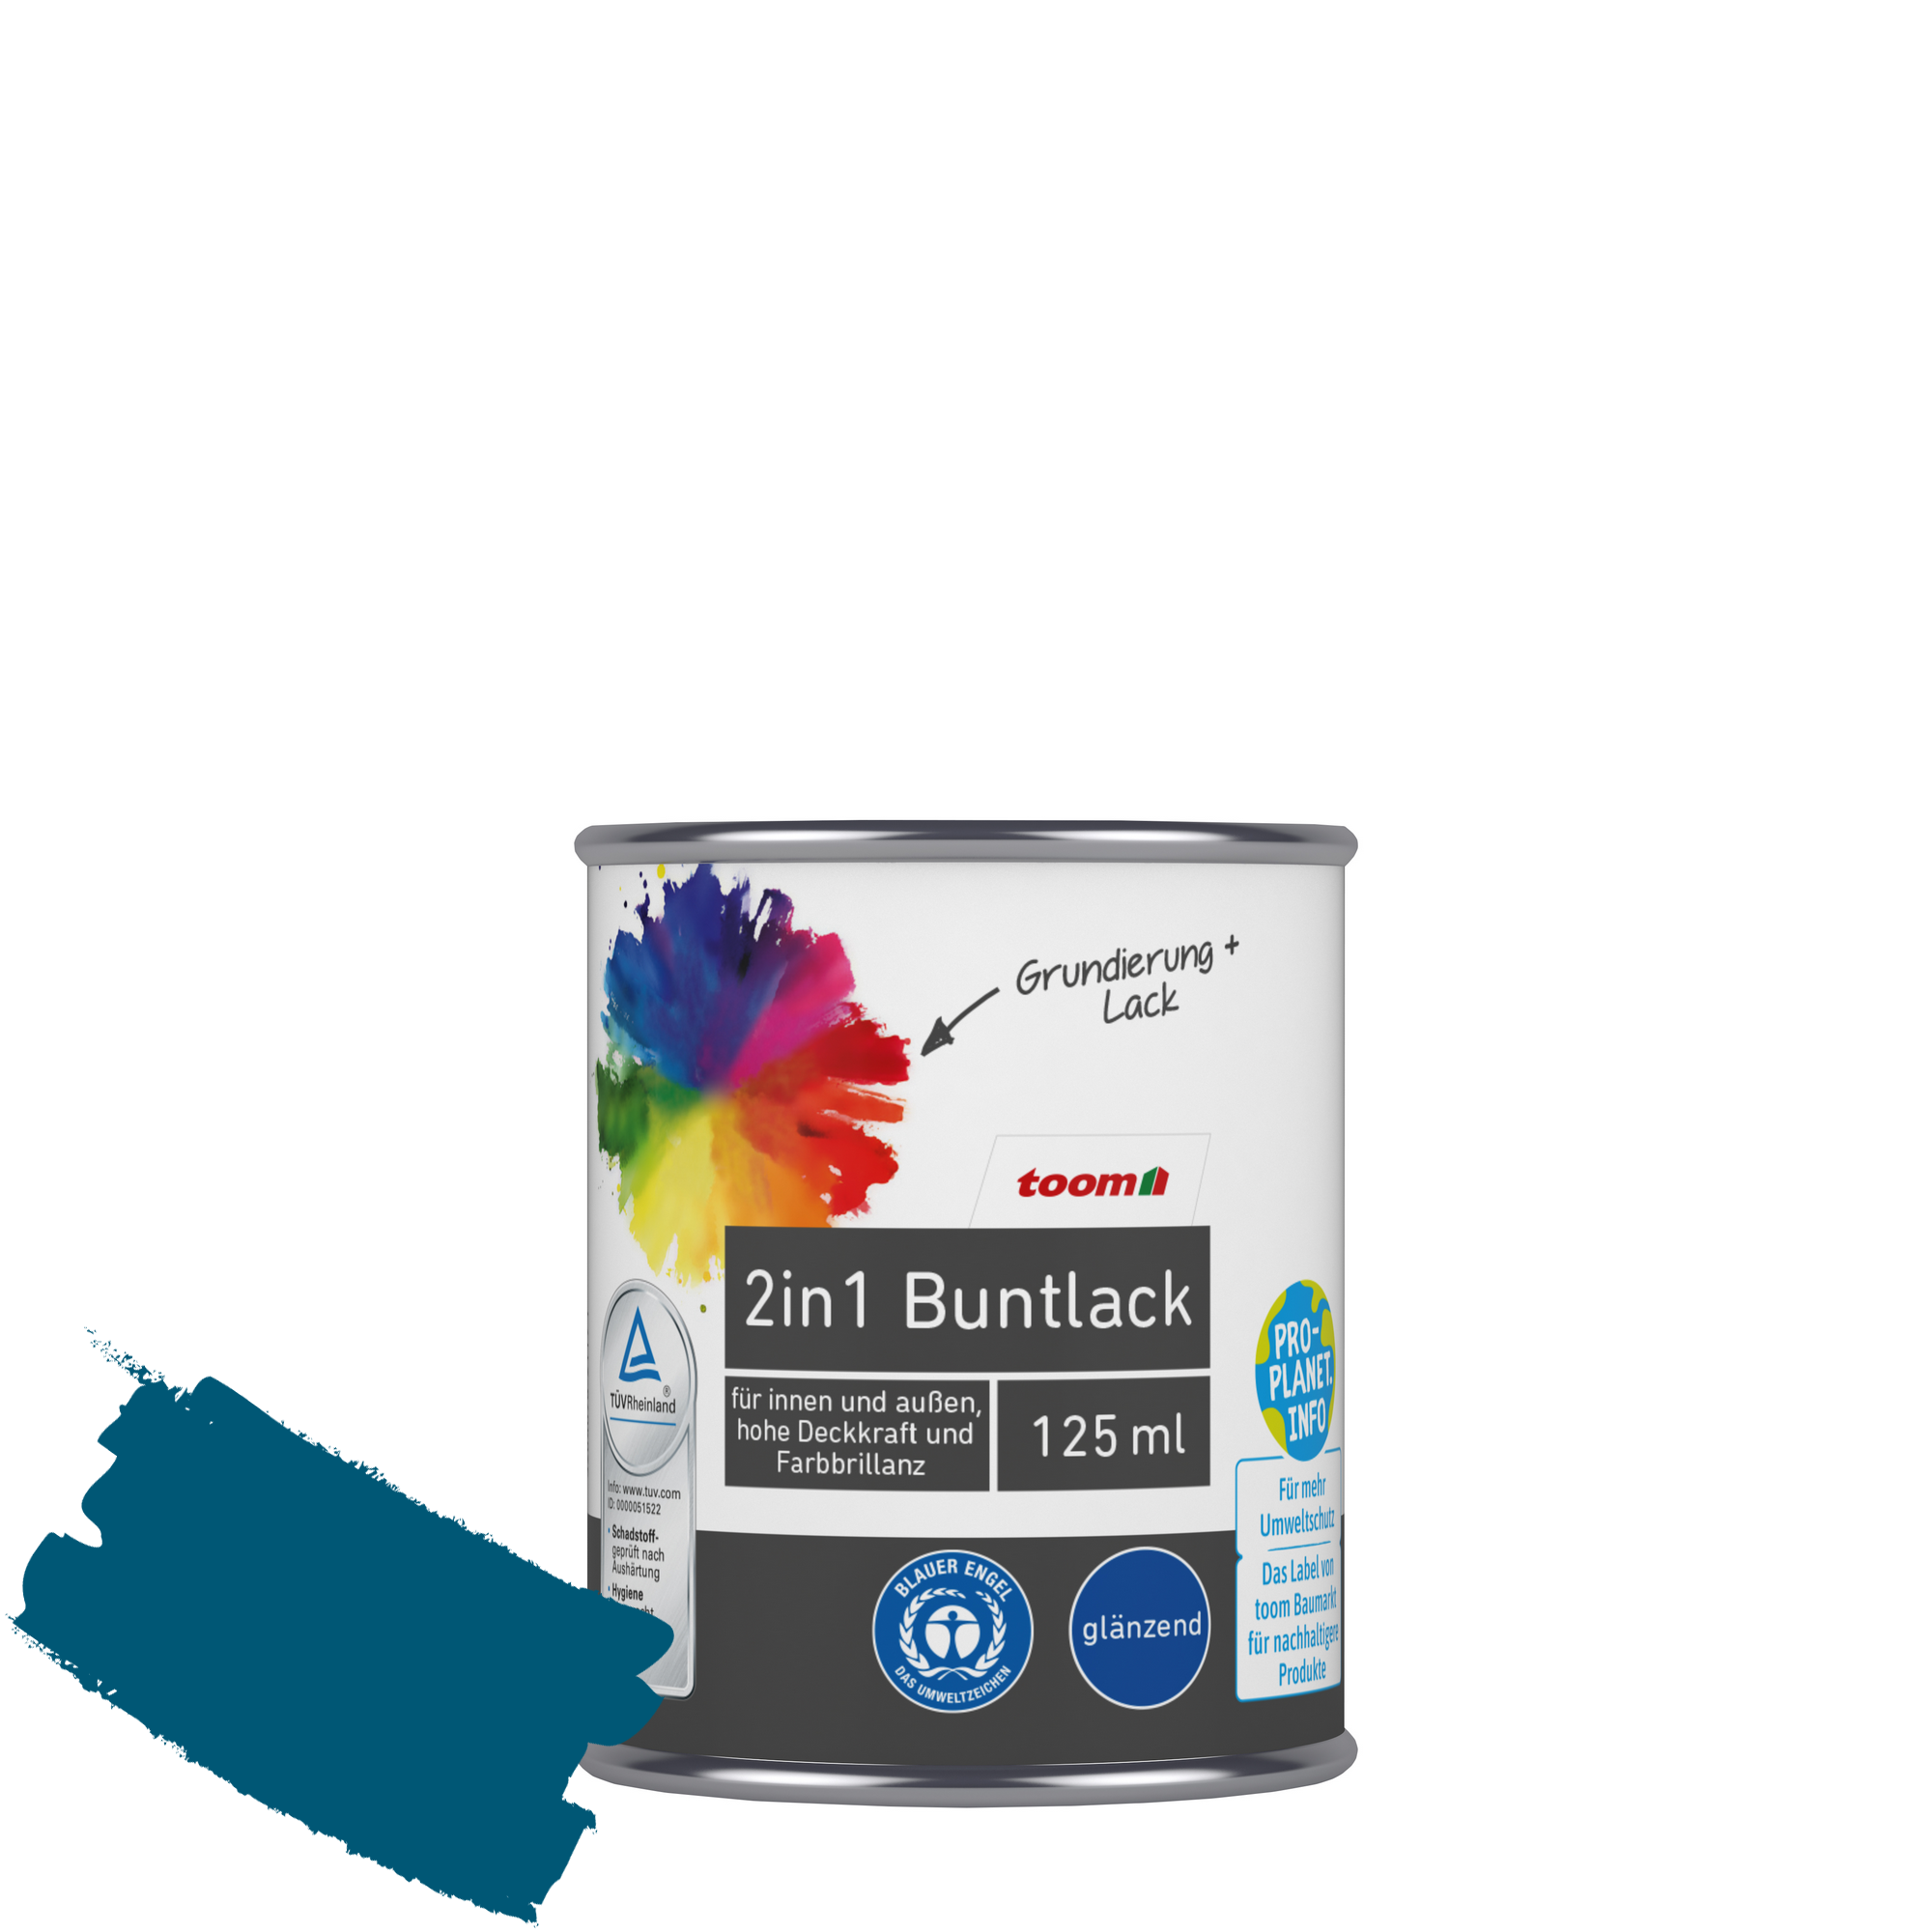 2in1 Buntlack 'Blaupause' enzianblau glänzend 125 ml + product picture